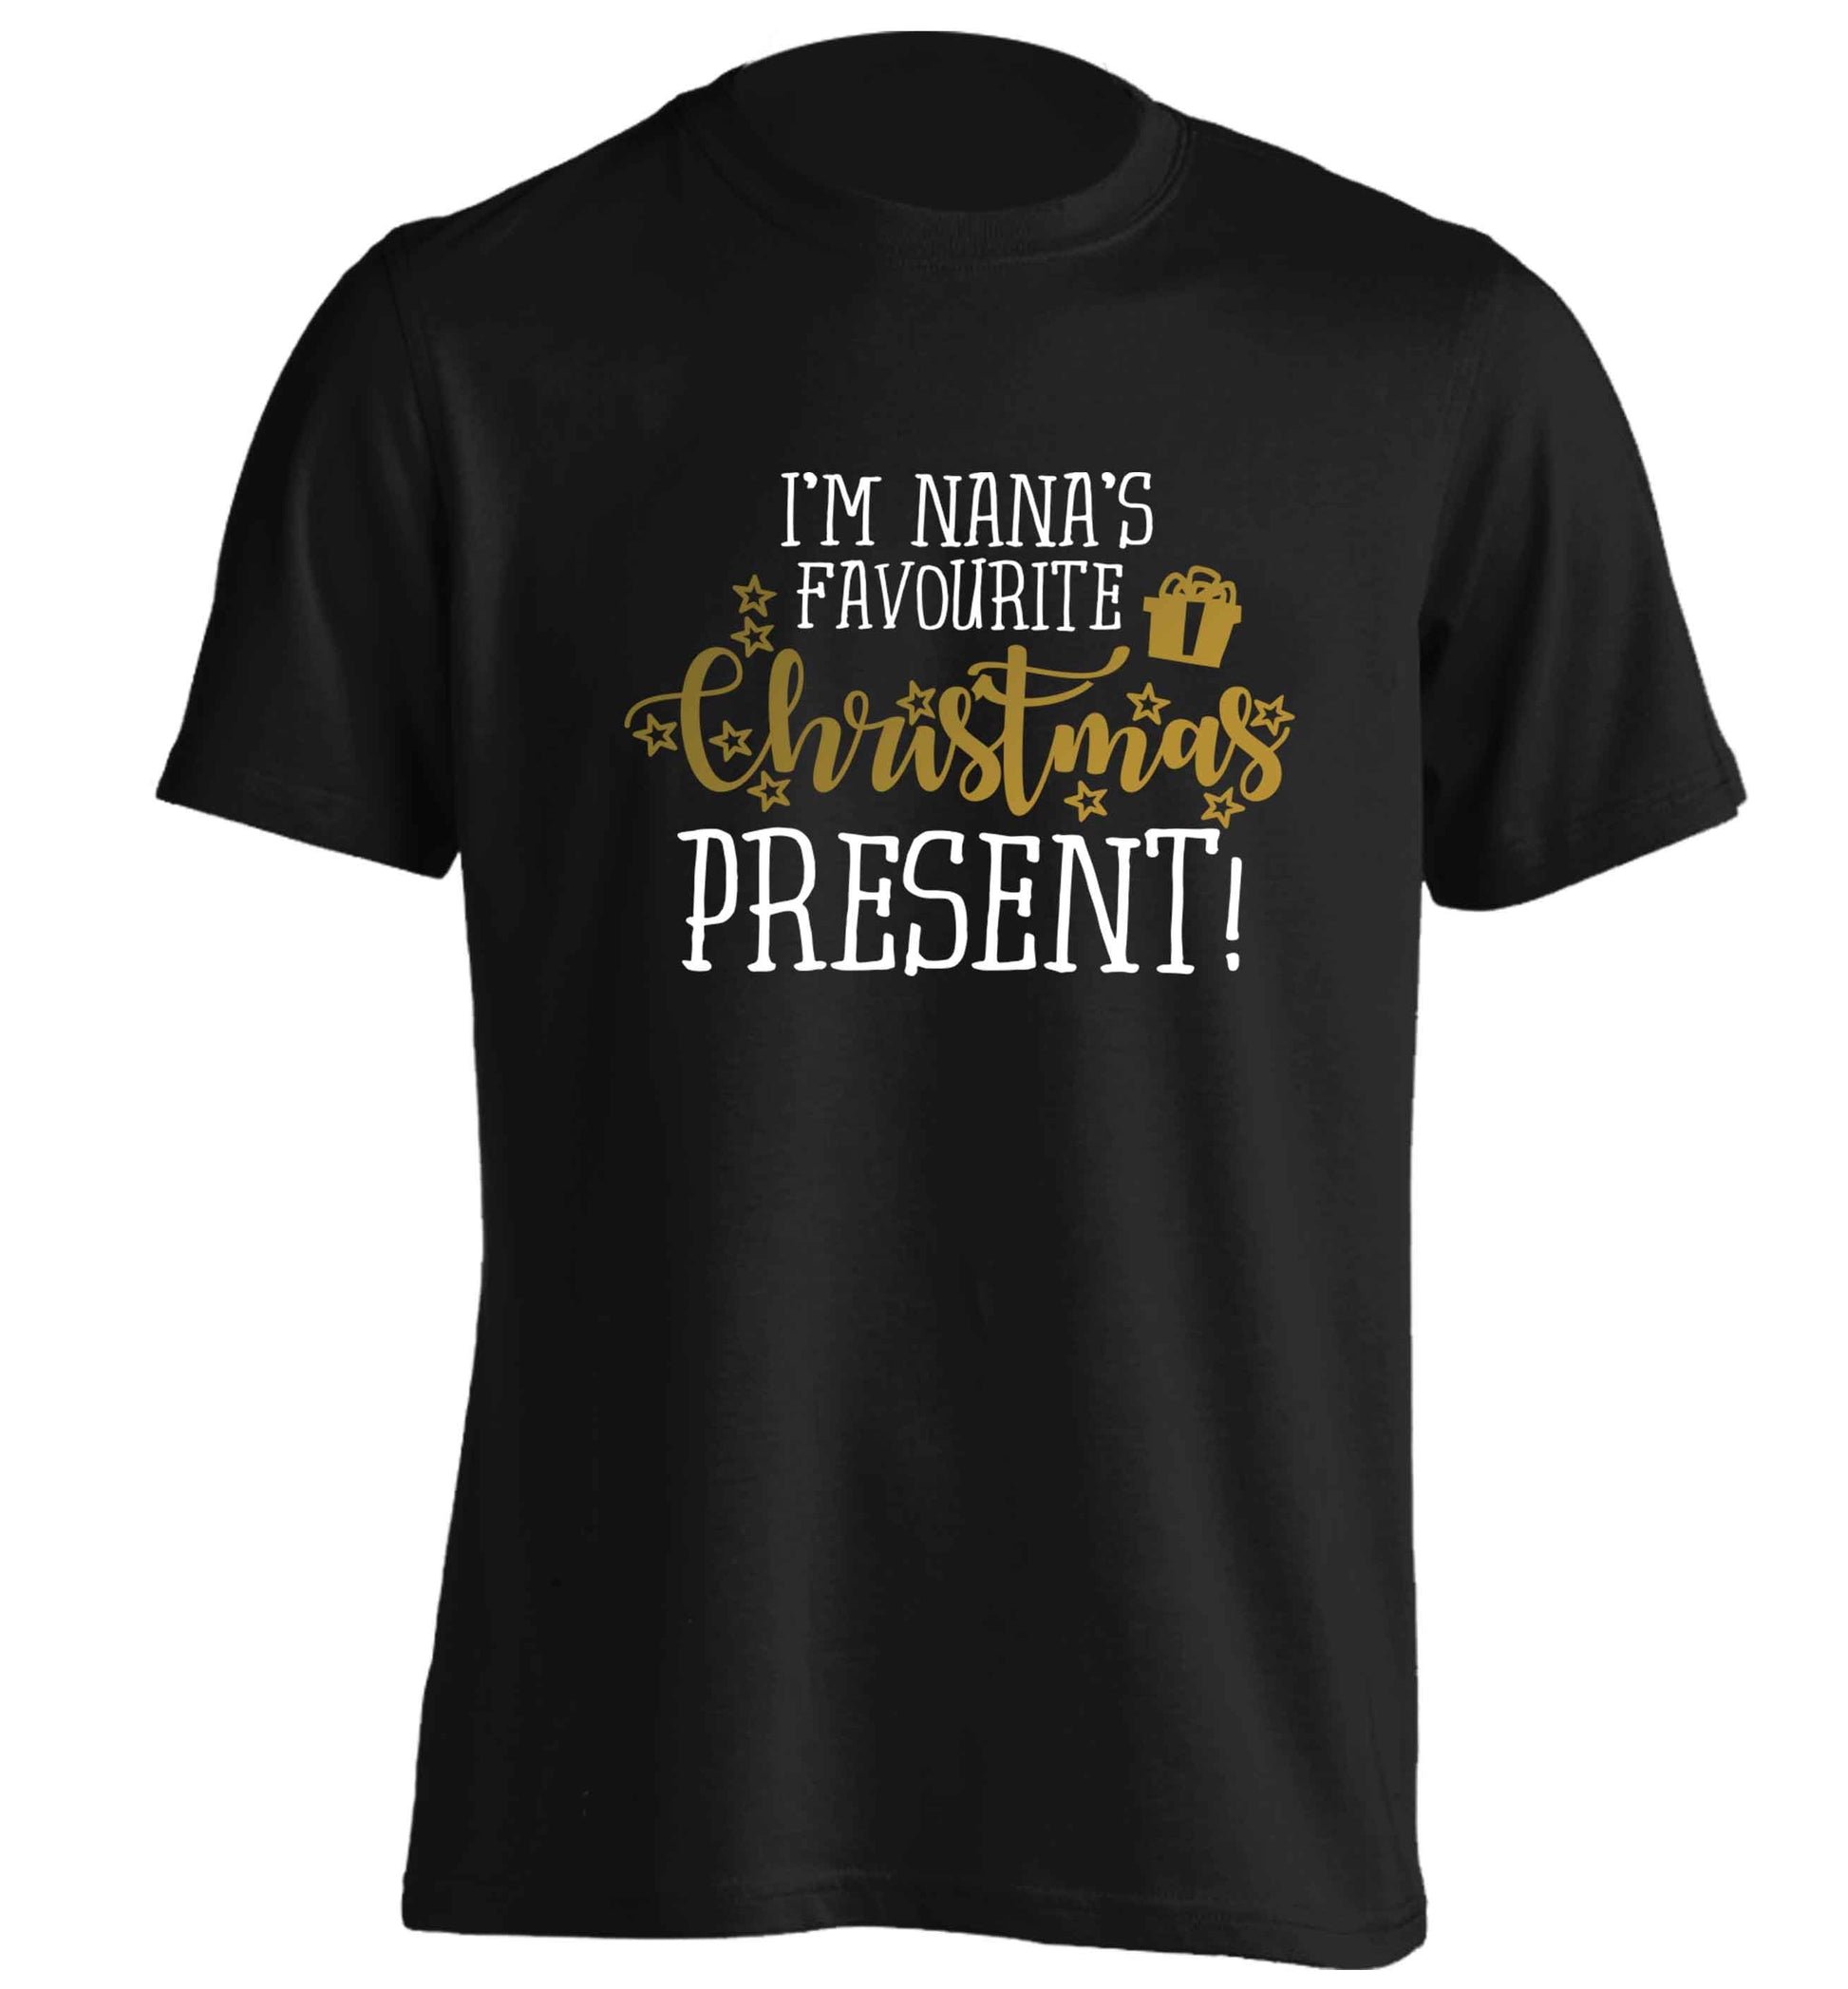 Nana's favourite Christmas present adults unisex black Tshirt 2XL